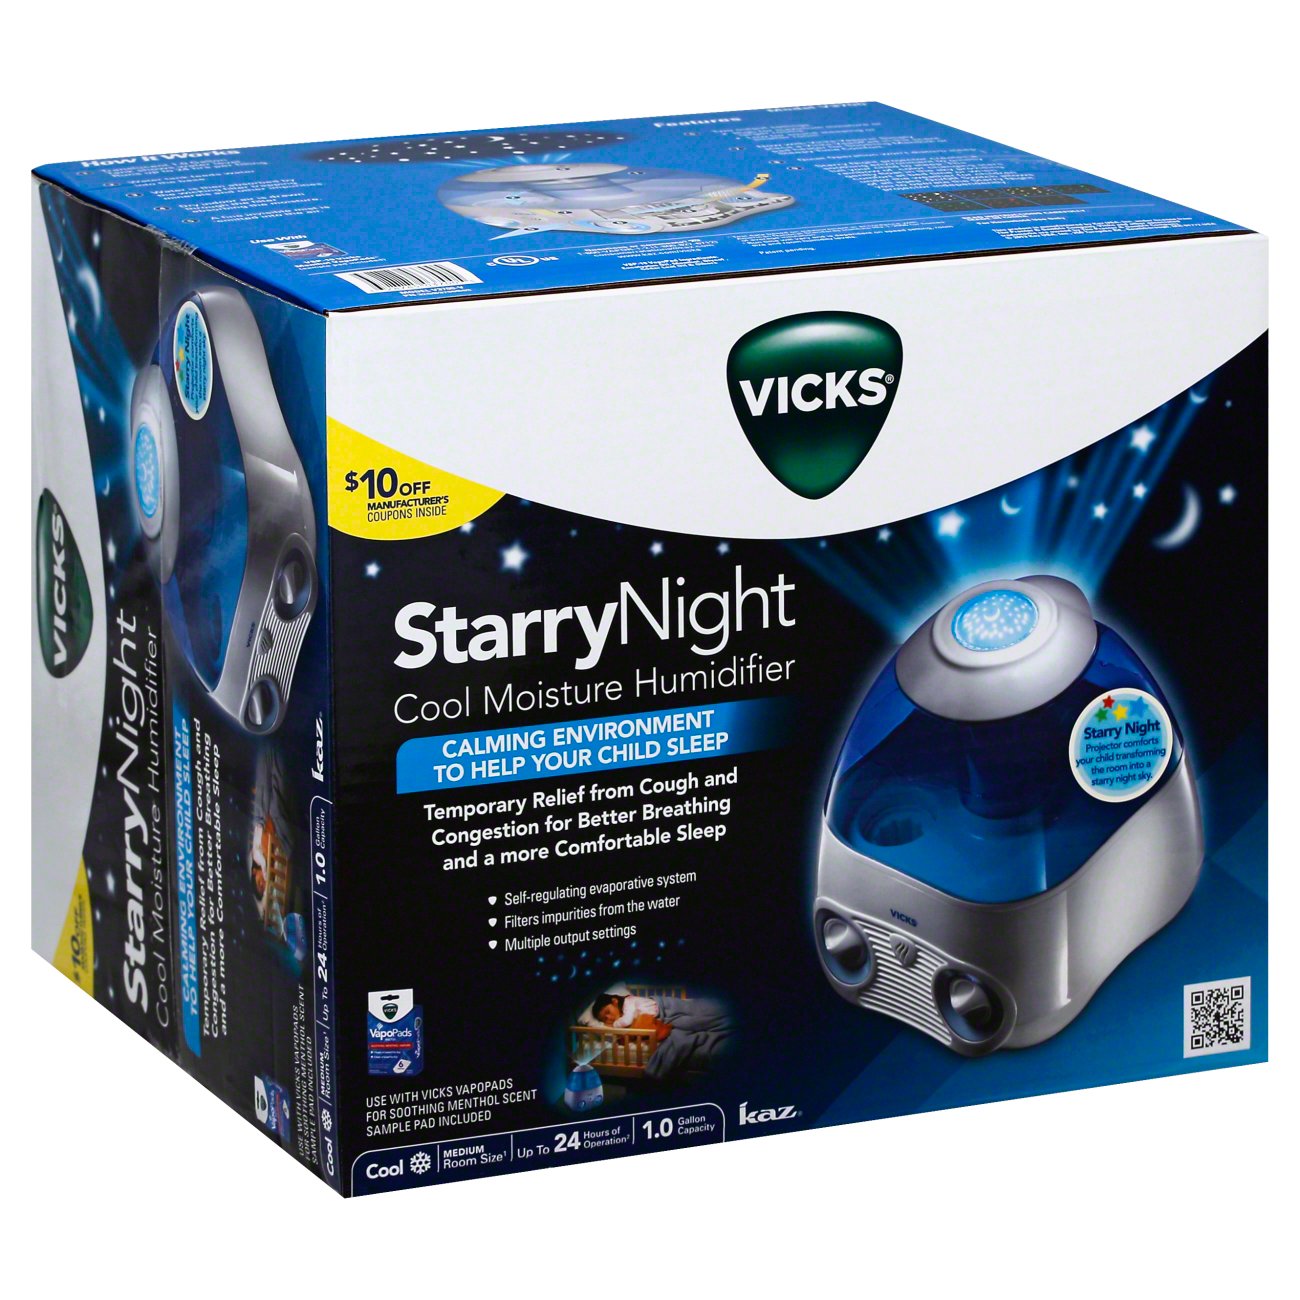 Vicks Starry Night Cool Moisture 1 Gallon Humidifier (Medium Room